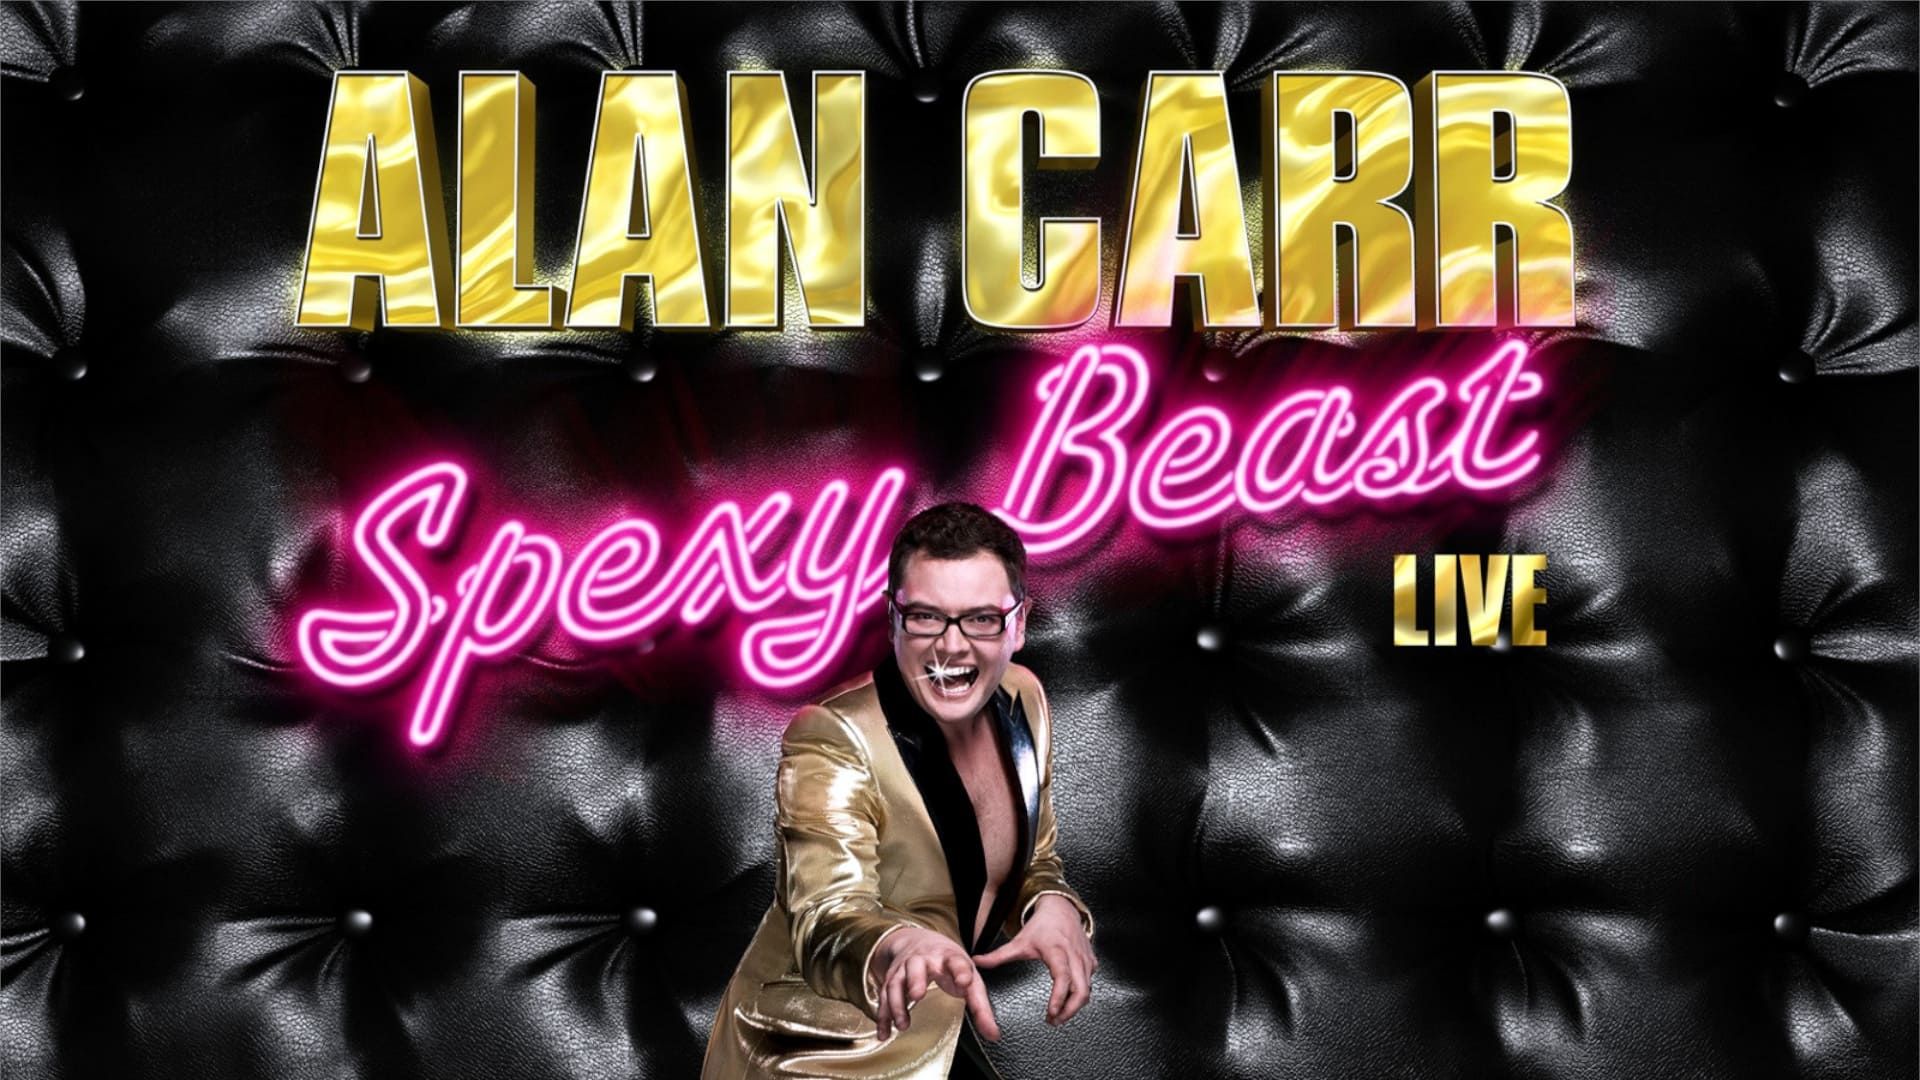 Alan Carr: Spexy Beast Live background